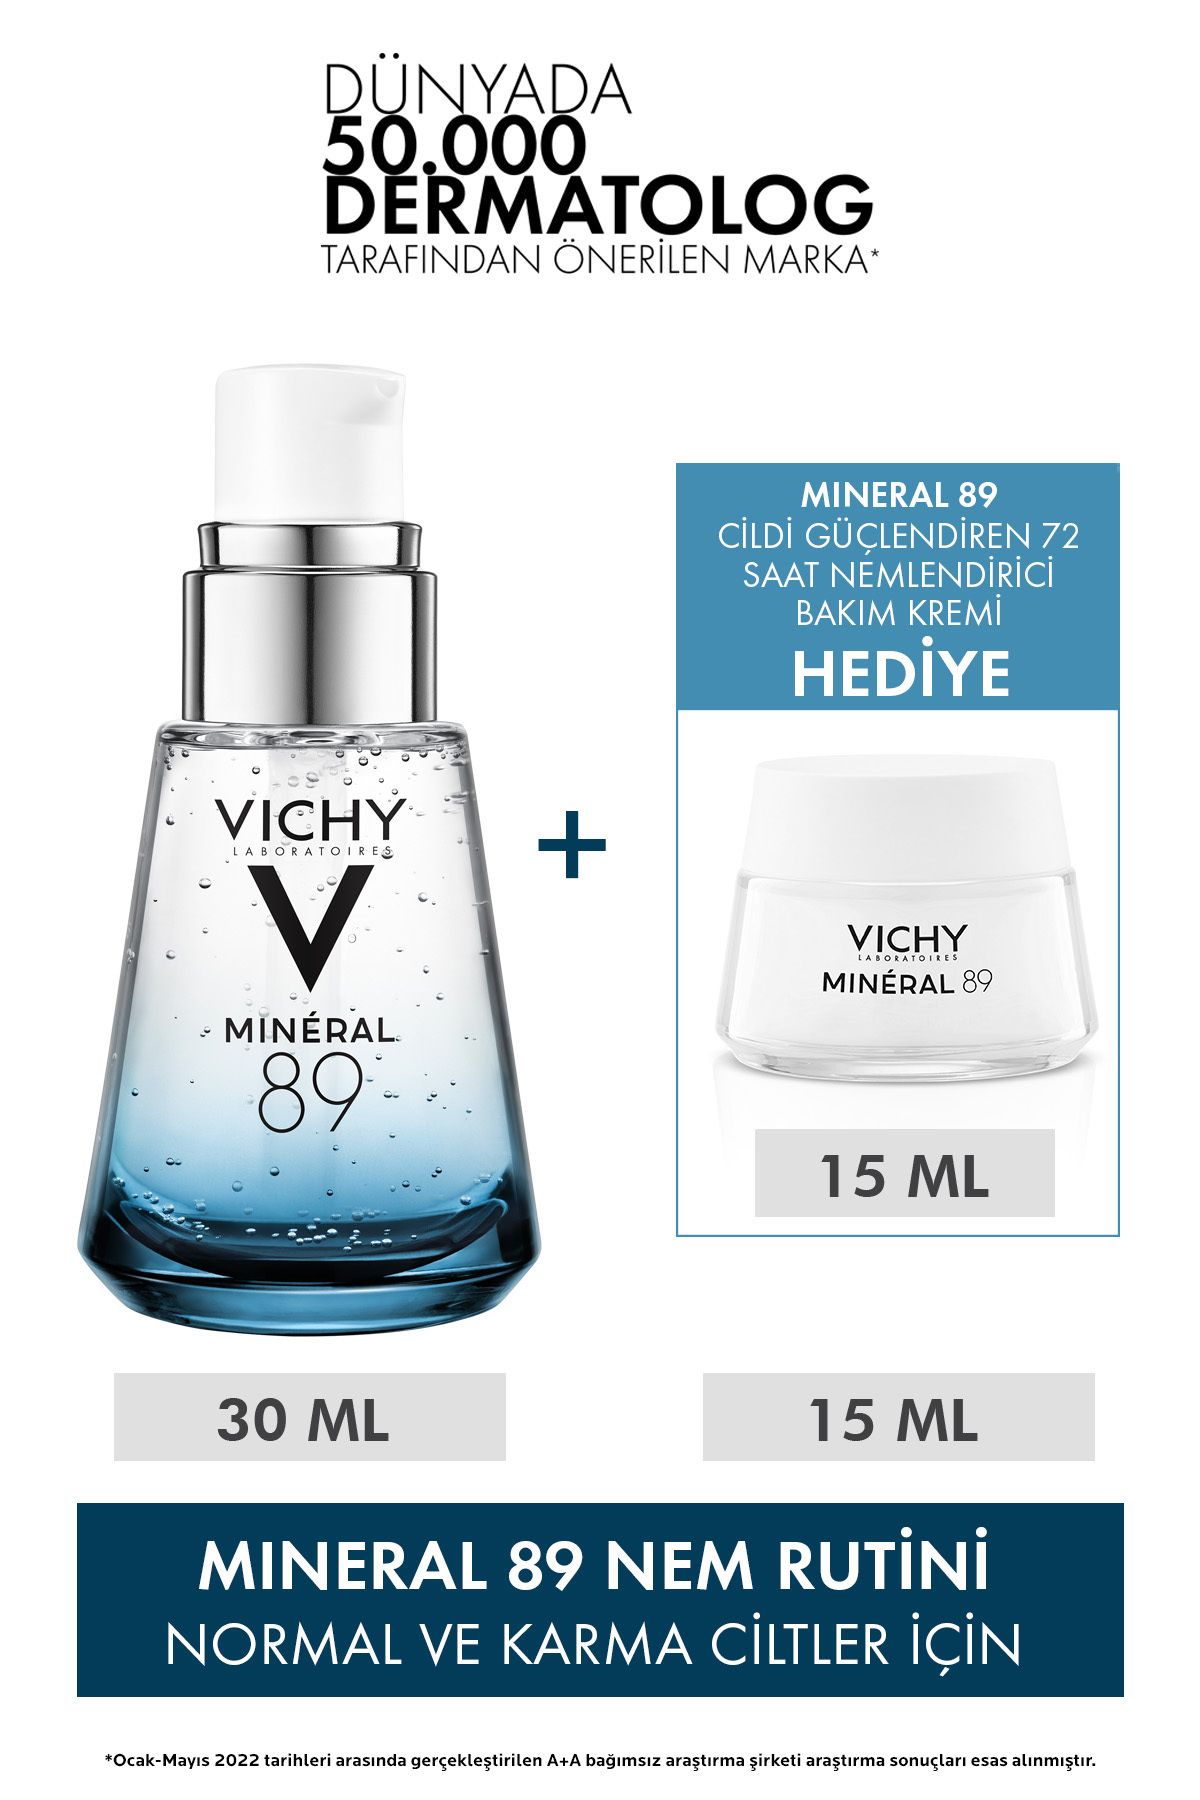 Vichy Mineral 89 Nem Rutini (Normal/Karma Ciltler)